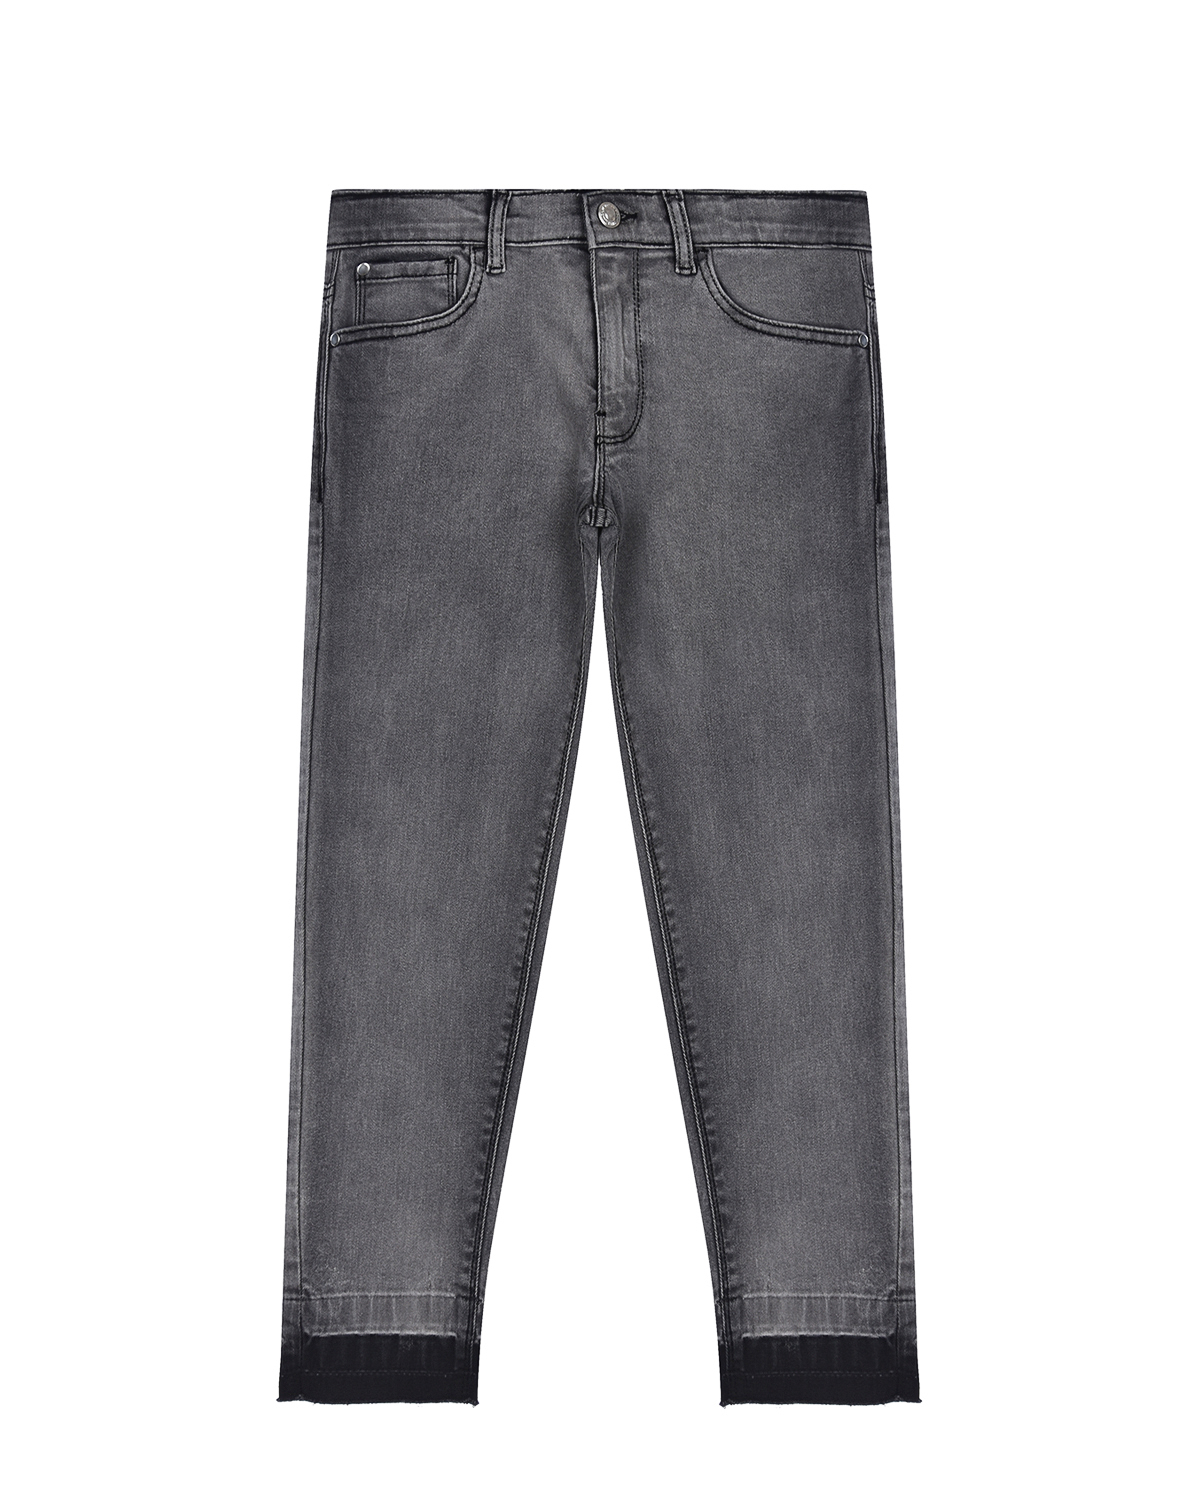 Серые узкие джинсы Its in my jeans, размер 140, цвет серый - фото 1